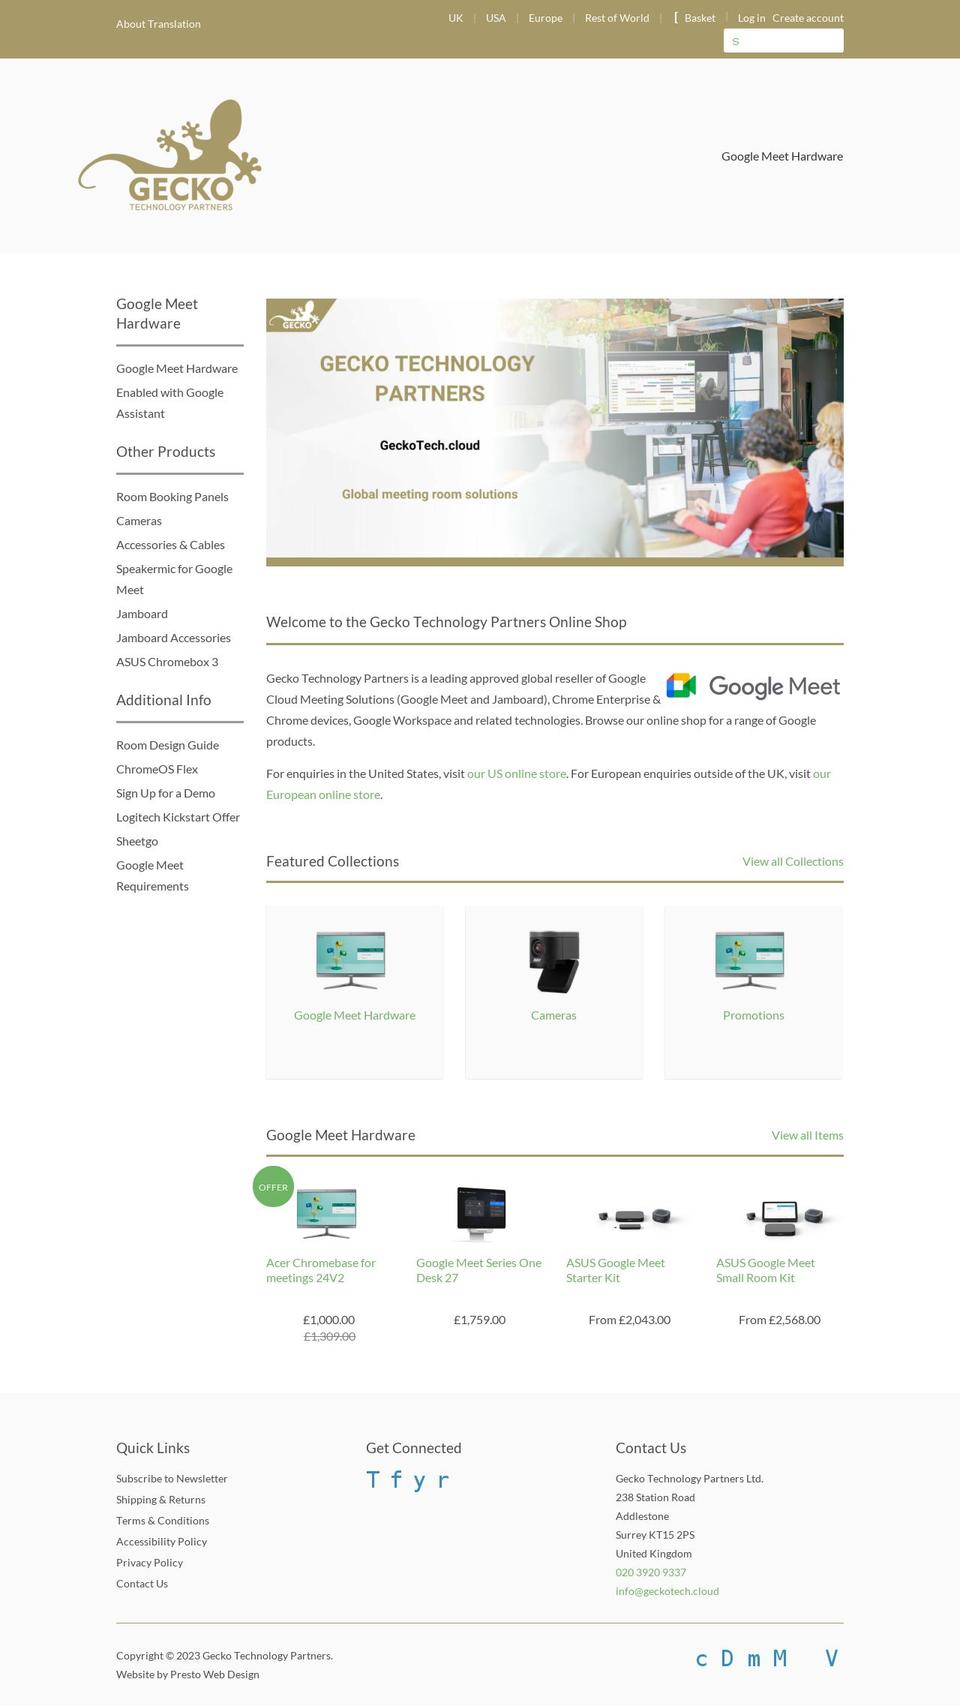 jamboard.cloud shopify website screenshot